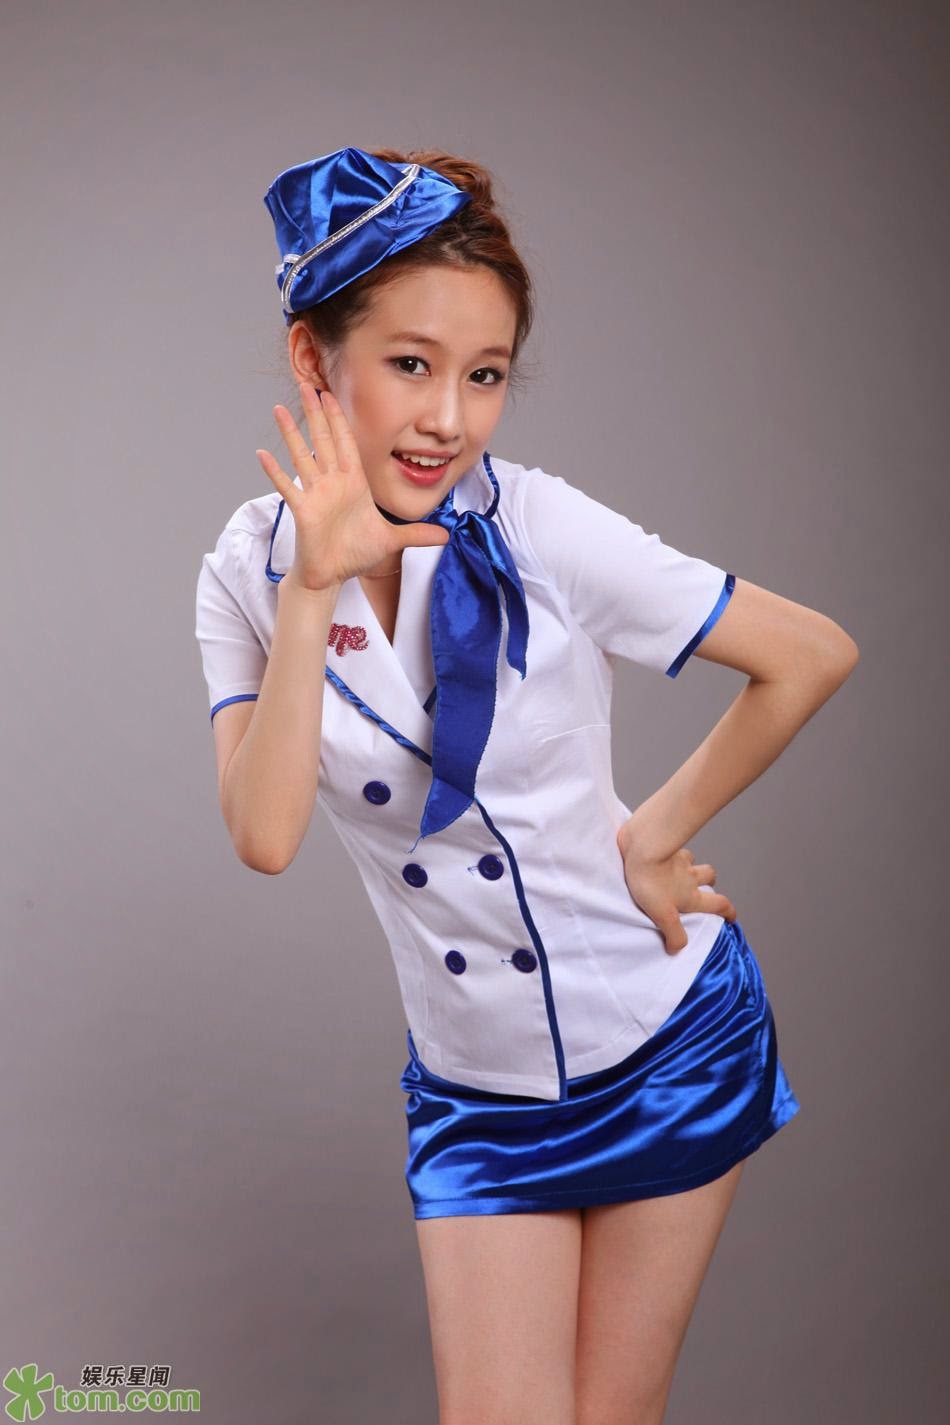 Stewardess costume: iMe.